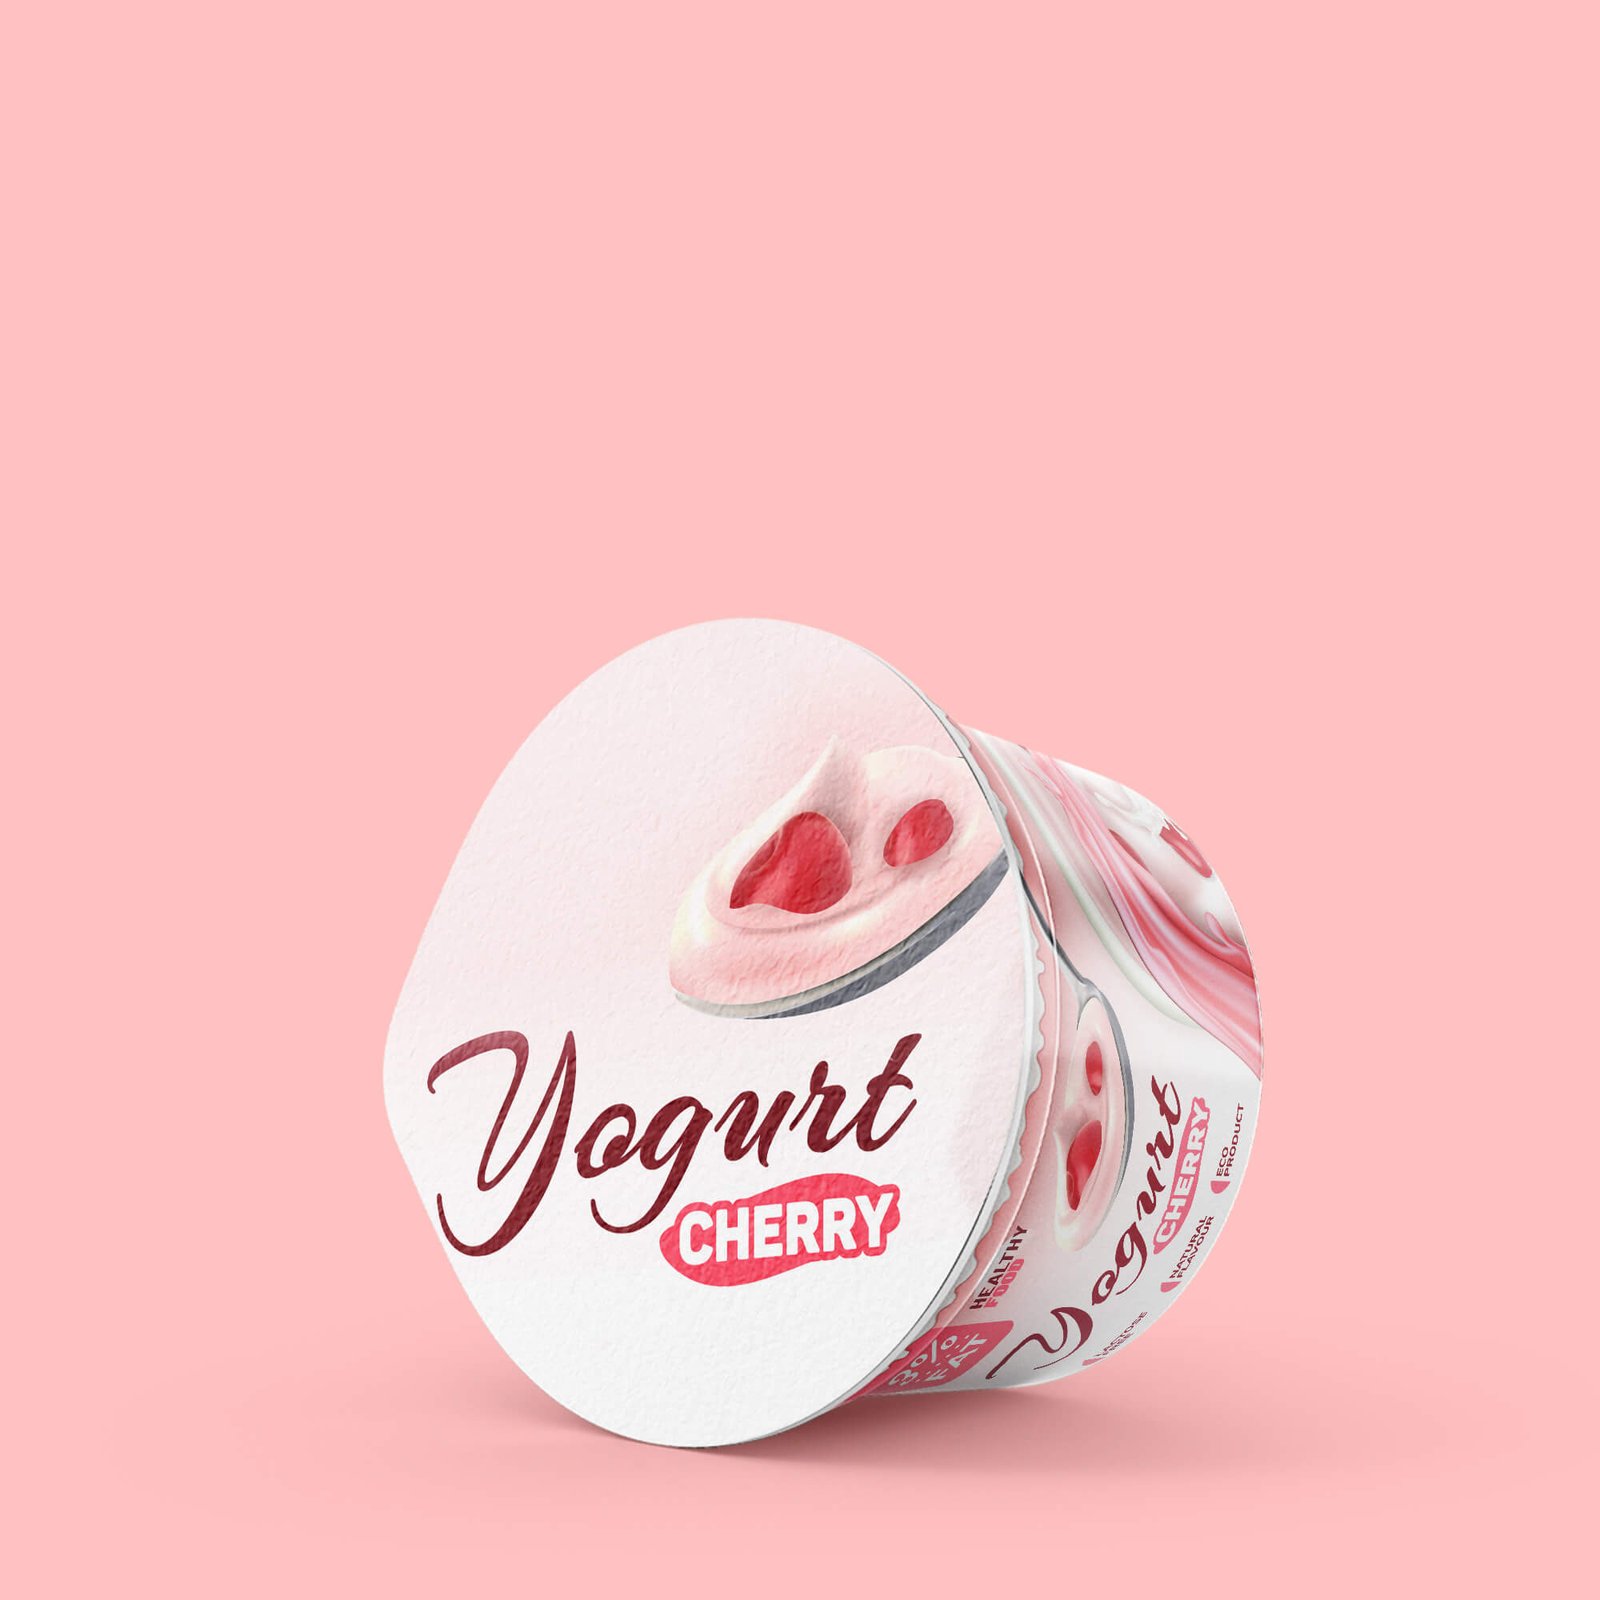 Design Free Yogurt Packaging Mockup PSD Template (1)